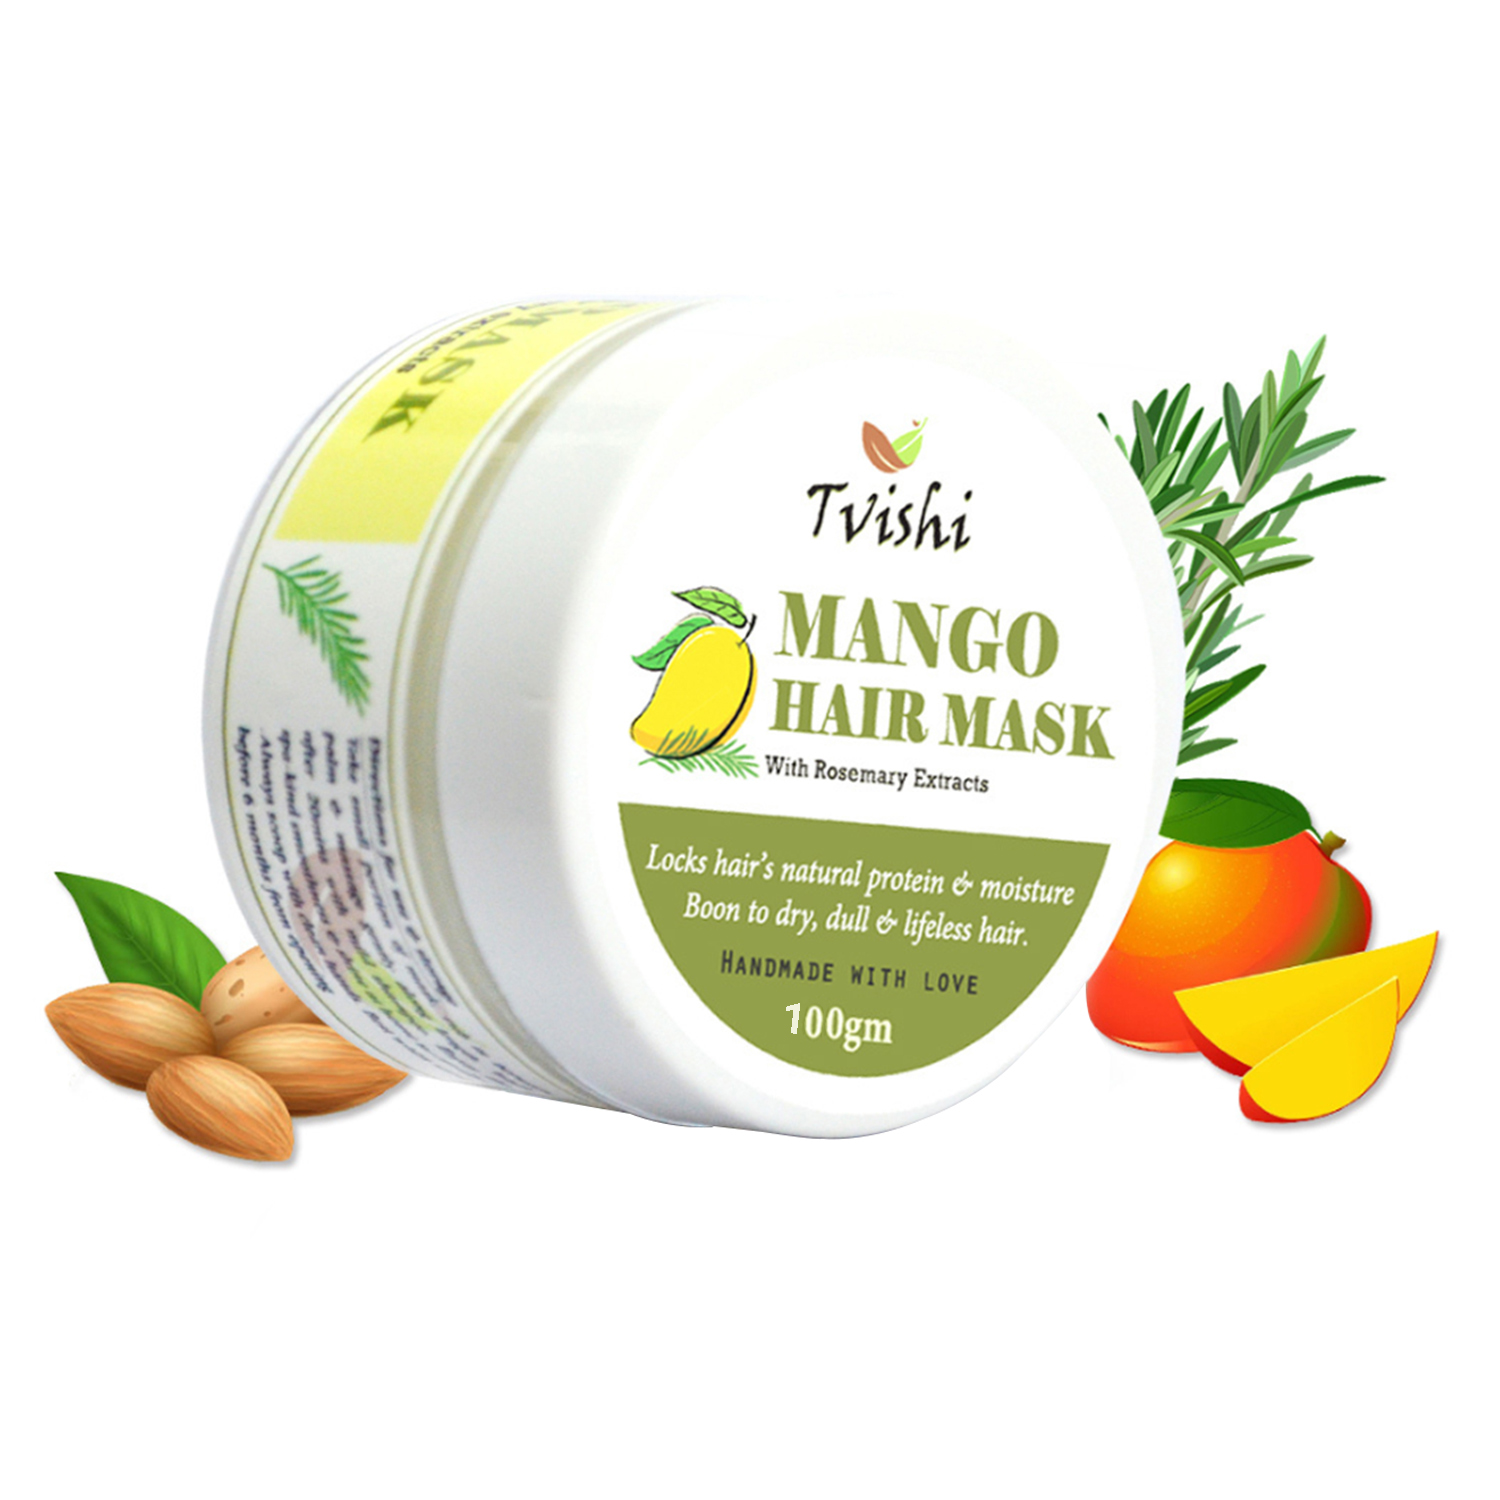 Tvishi Handmade Mango Hair Mask With Rosemary Extracts-100gm